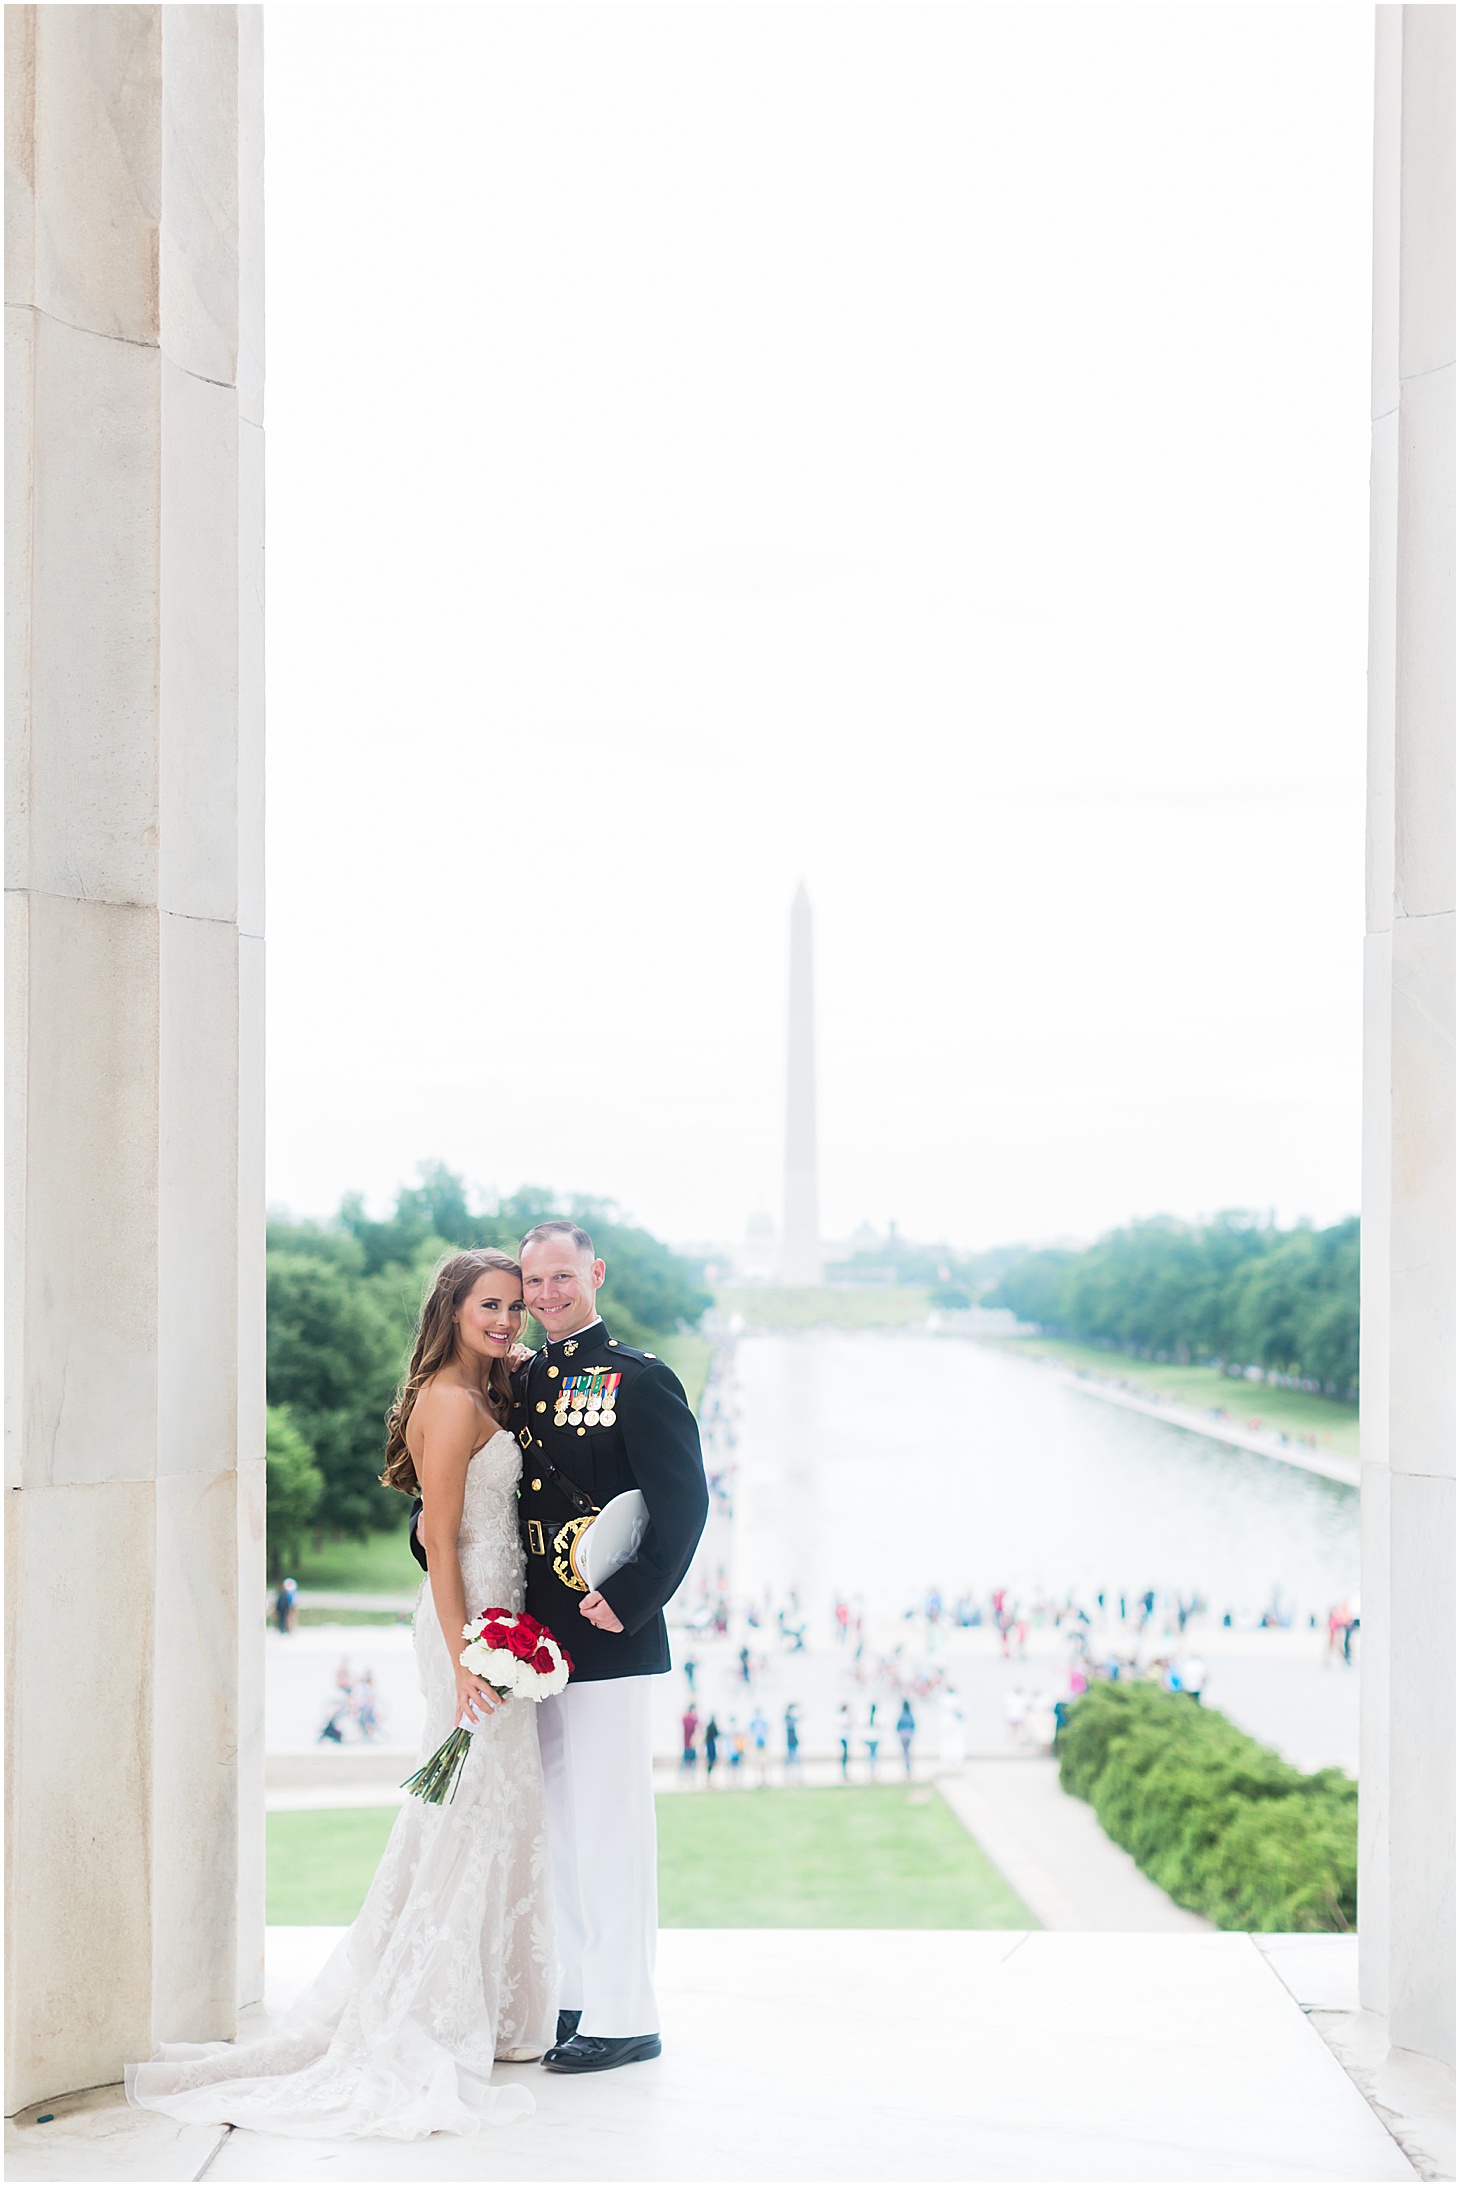 Spring Wedding Portraits at Lincoln Memorial, Intimate Military Wedding at DC War Memorial, Sarah Bradshaw Photography, DC Wedding Photographer